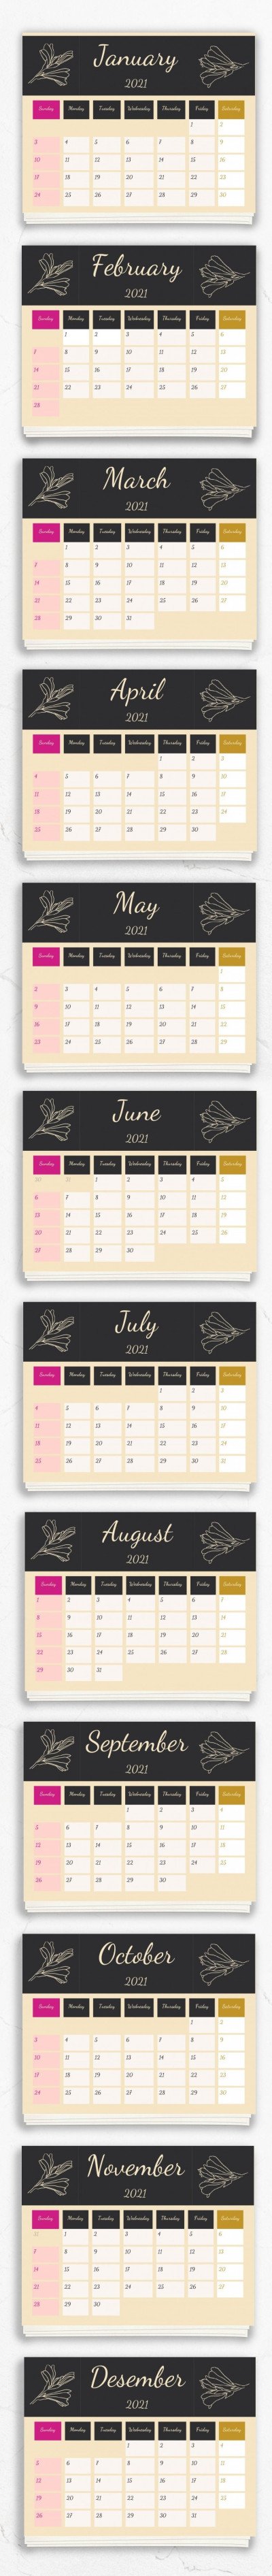 Lovely Printable Calendar 2021 - Monthly Calendars